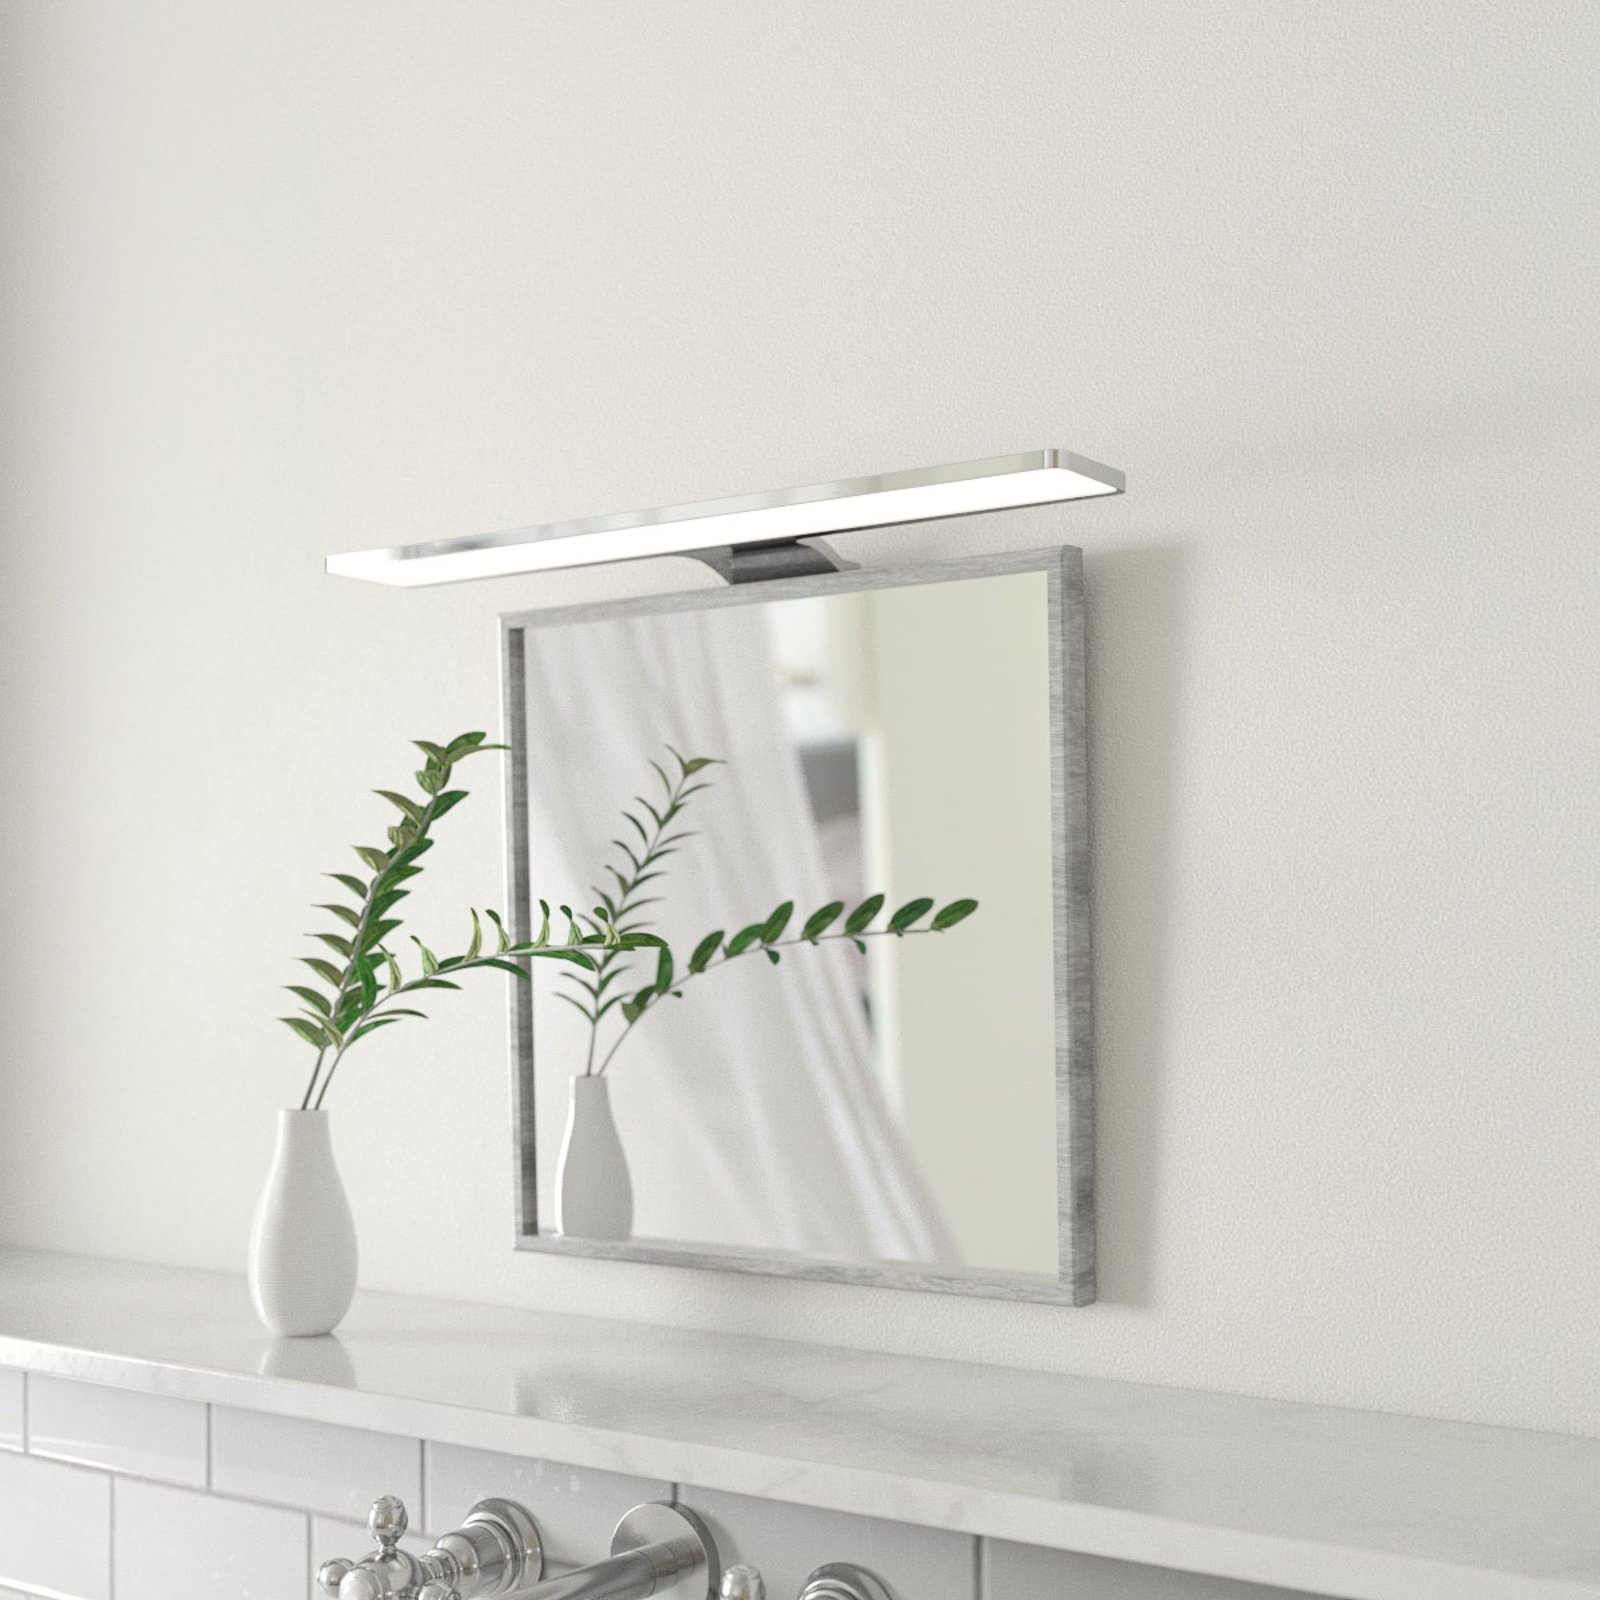 Nayra - vit LED-spegellampa